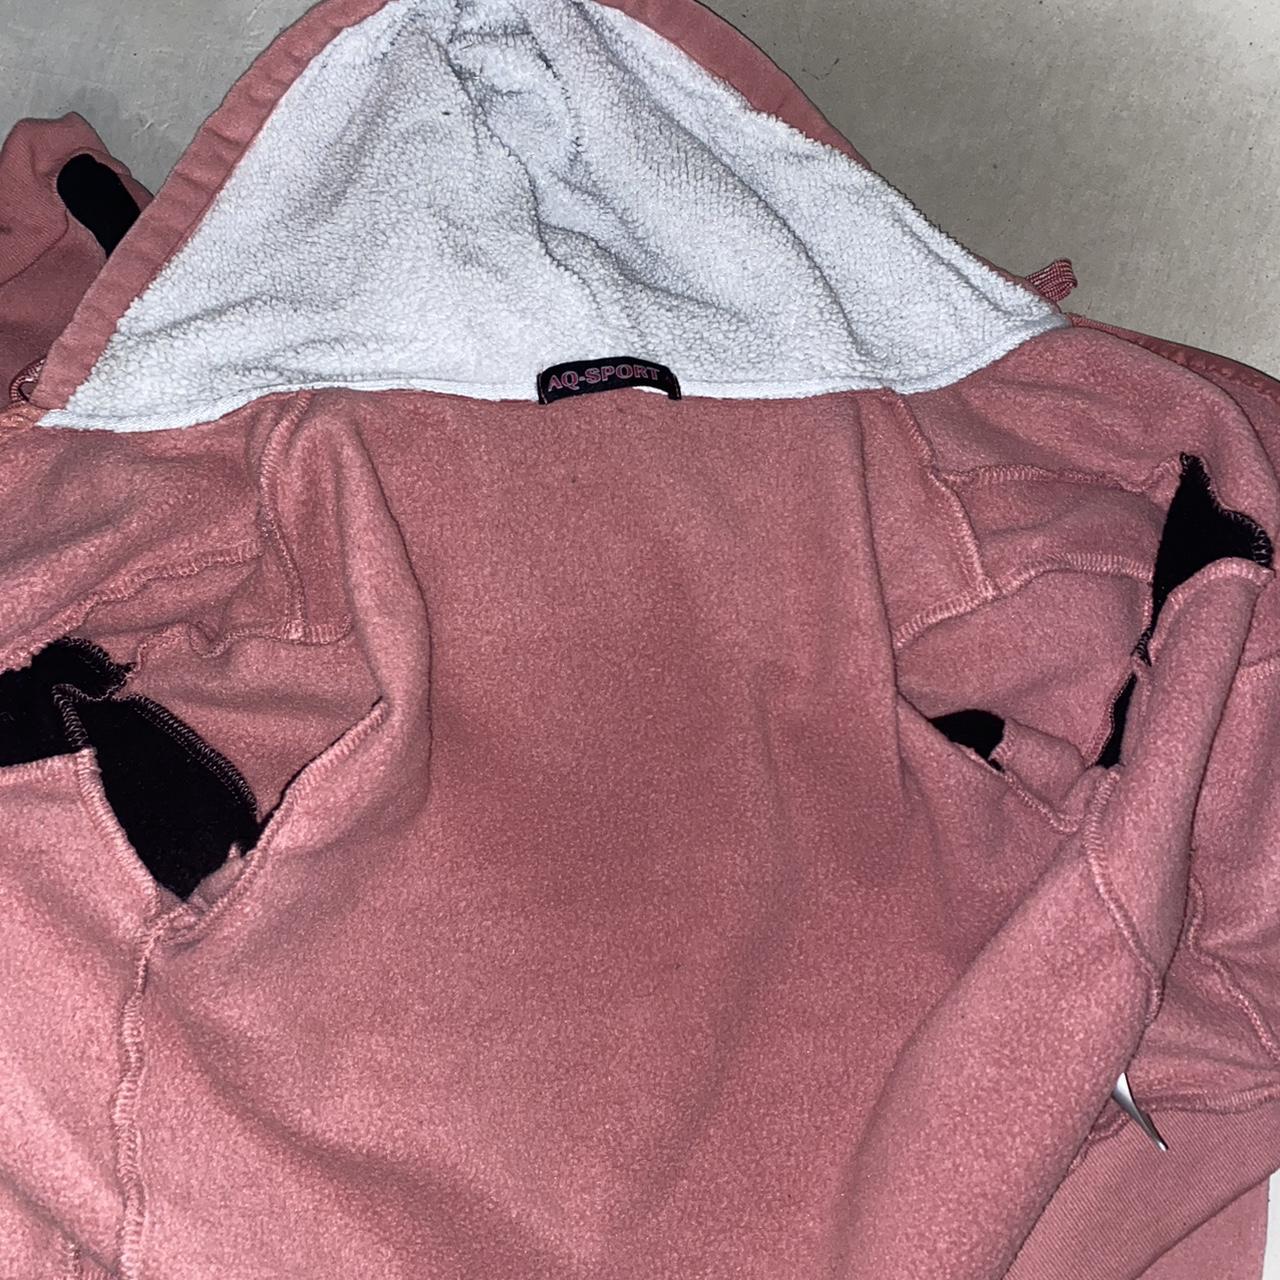 Product Image 1 - Sweat Shirt and Pants! Pink